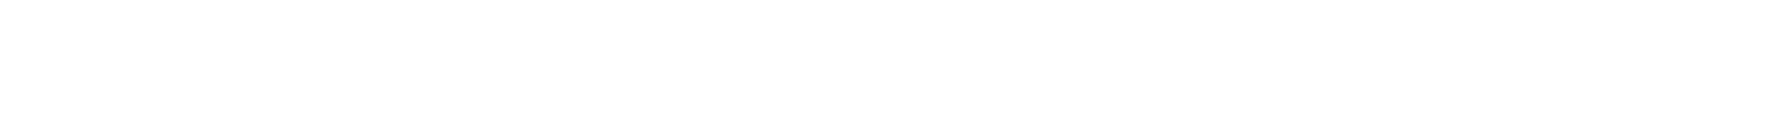 distance-card-logo